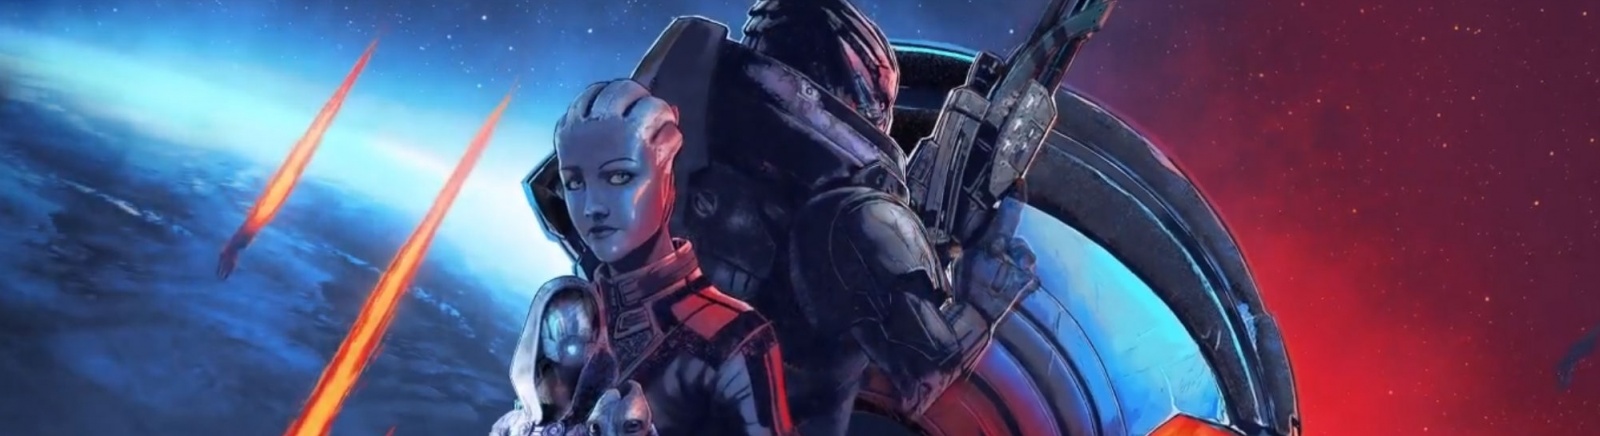 Mass Effect Legendary Edition — Редактор сохранений (Trilogy SE) 1.9.0 